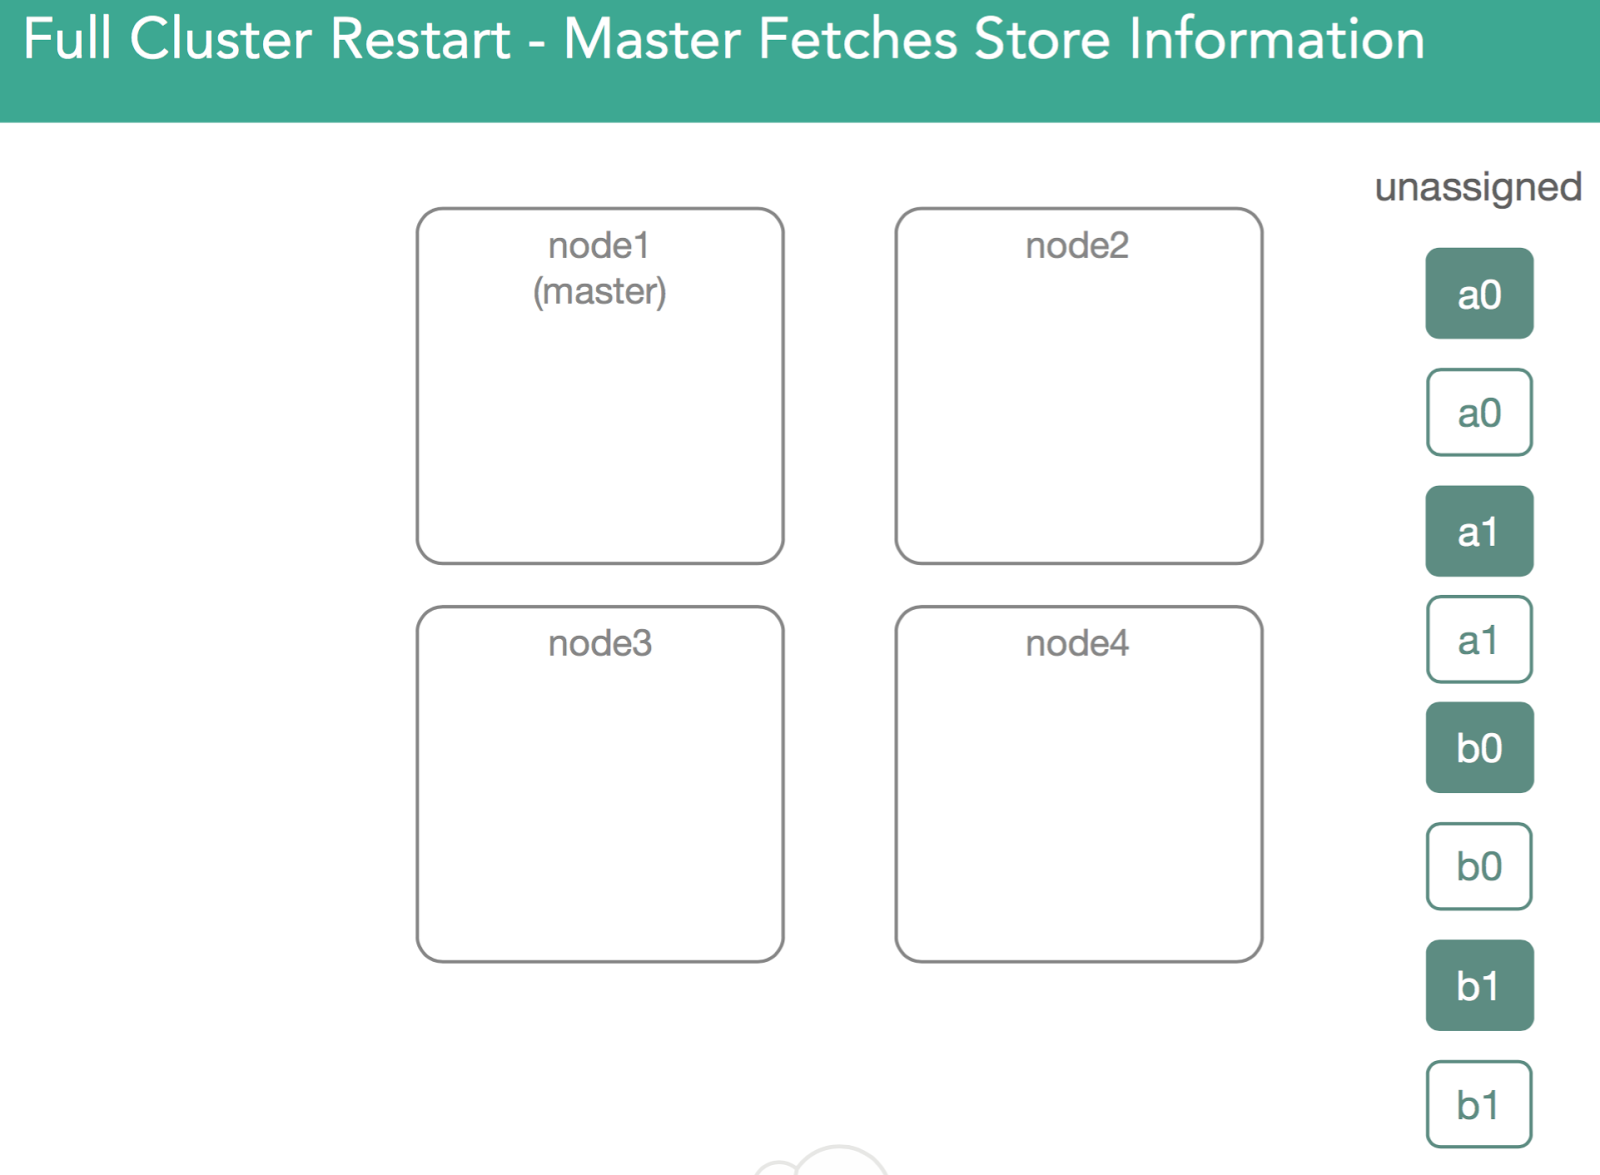 Full Cluster Restart - Master Fetches Store Information